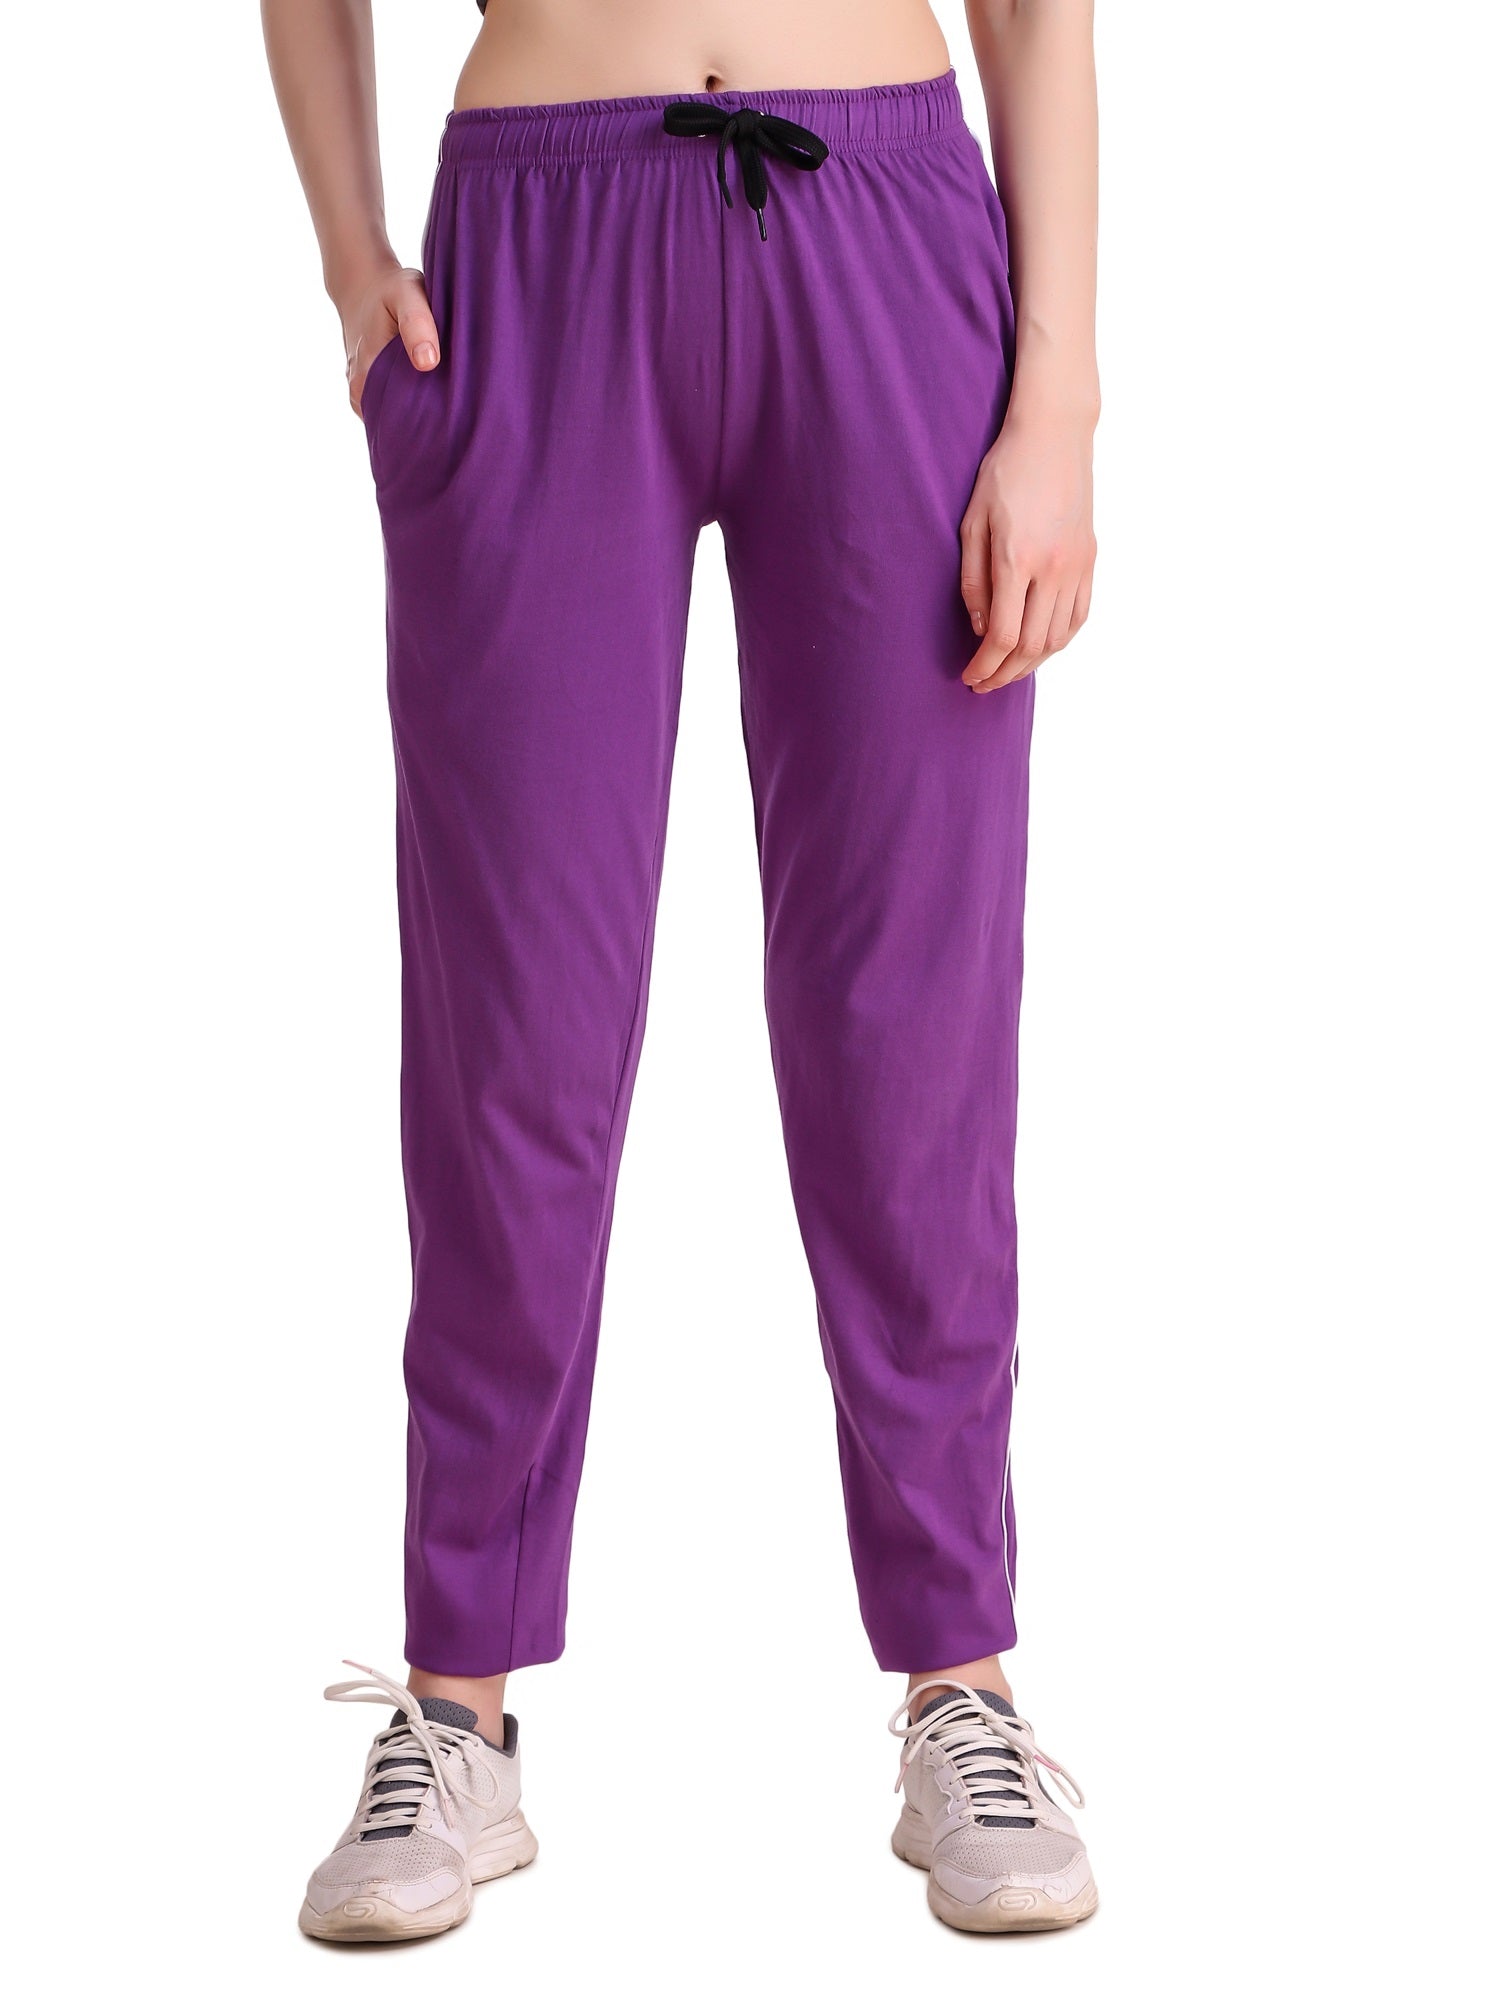 CAICJ98 Pants For Women, Cargo Pants Women Womens Joggers with Side  Pockets, Rib Bottoms, Soft Sweatpants for Women Purple,S - Walmart.com